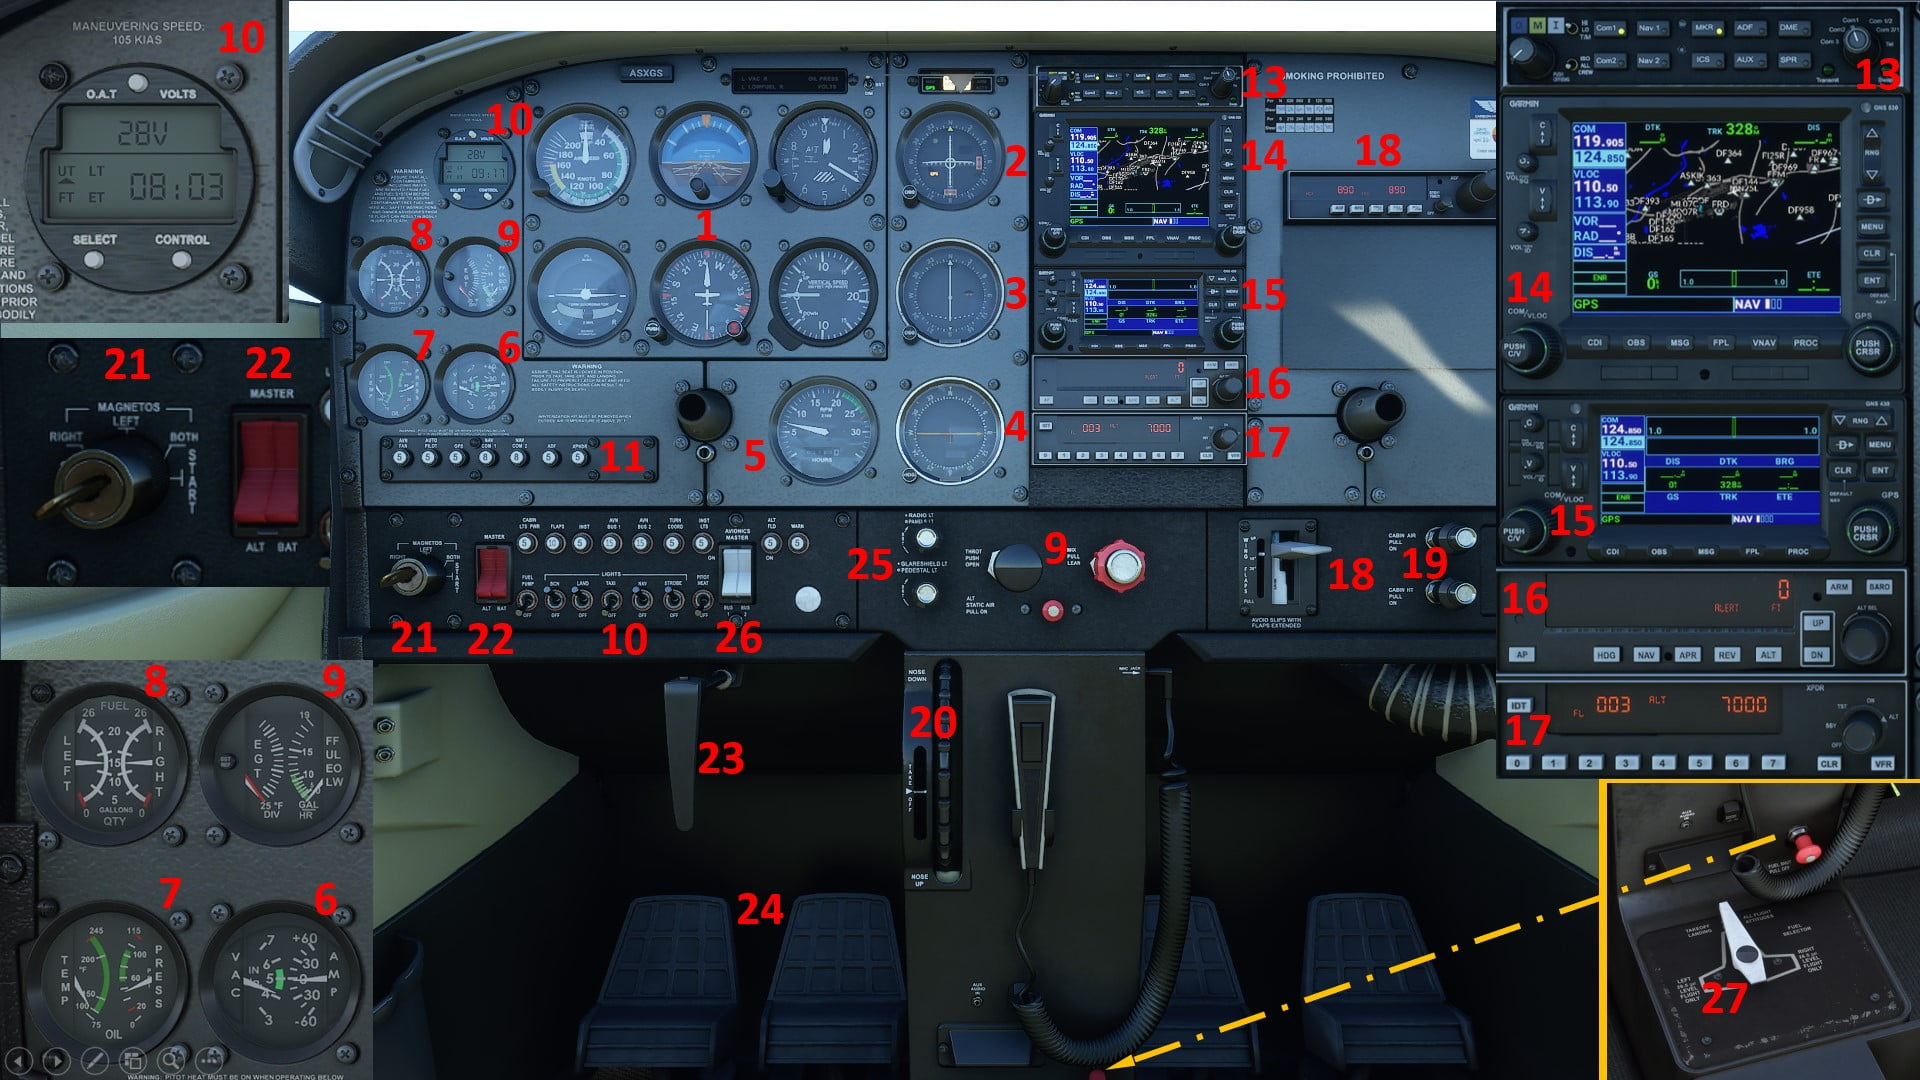 Microsoft Flight Simulator 2020 (Standard) Multilingual PC - Comet